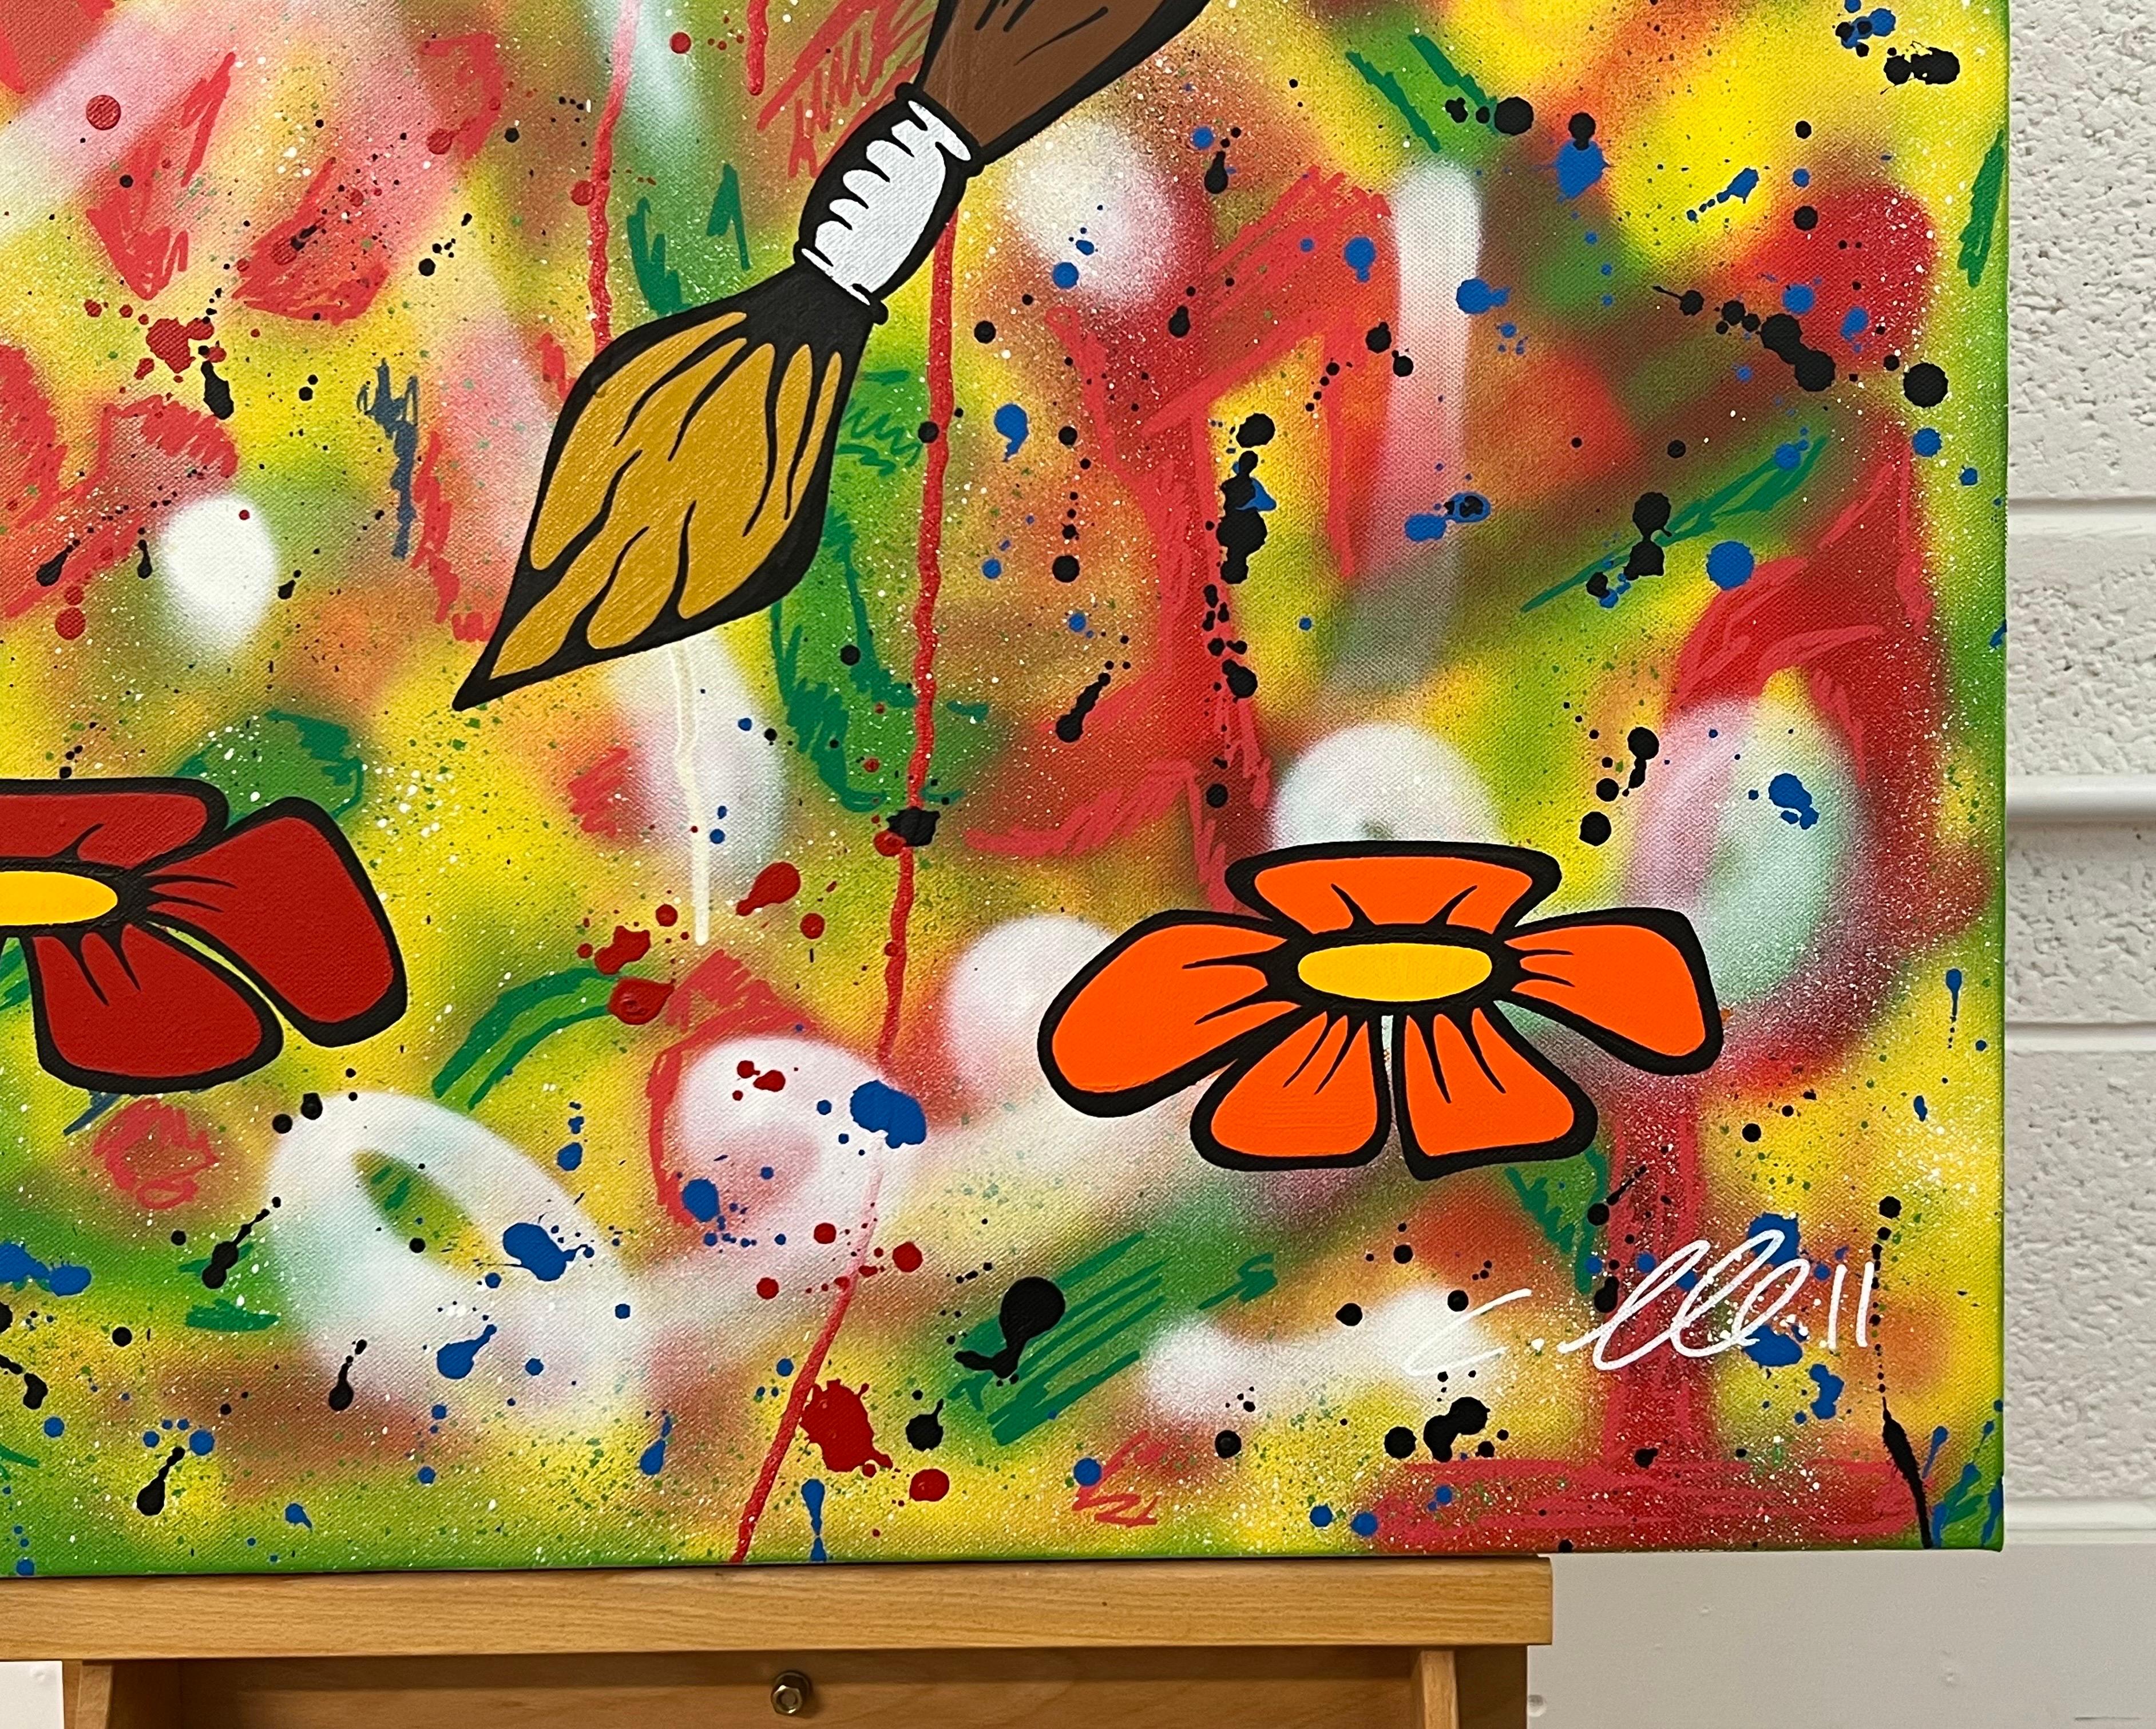 Flowers & Paint Brush Pop Art on Abstract Background by British Graffiti Artist 4